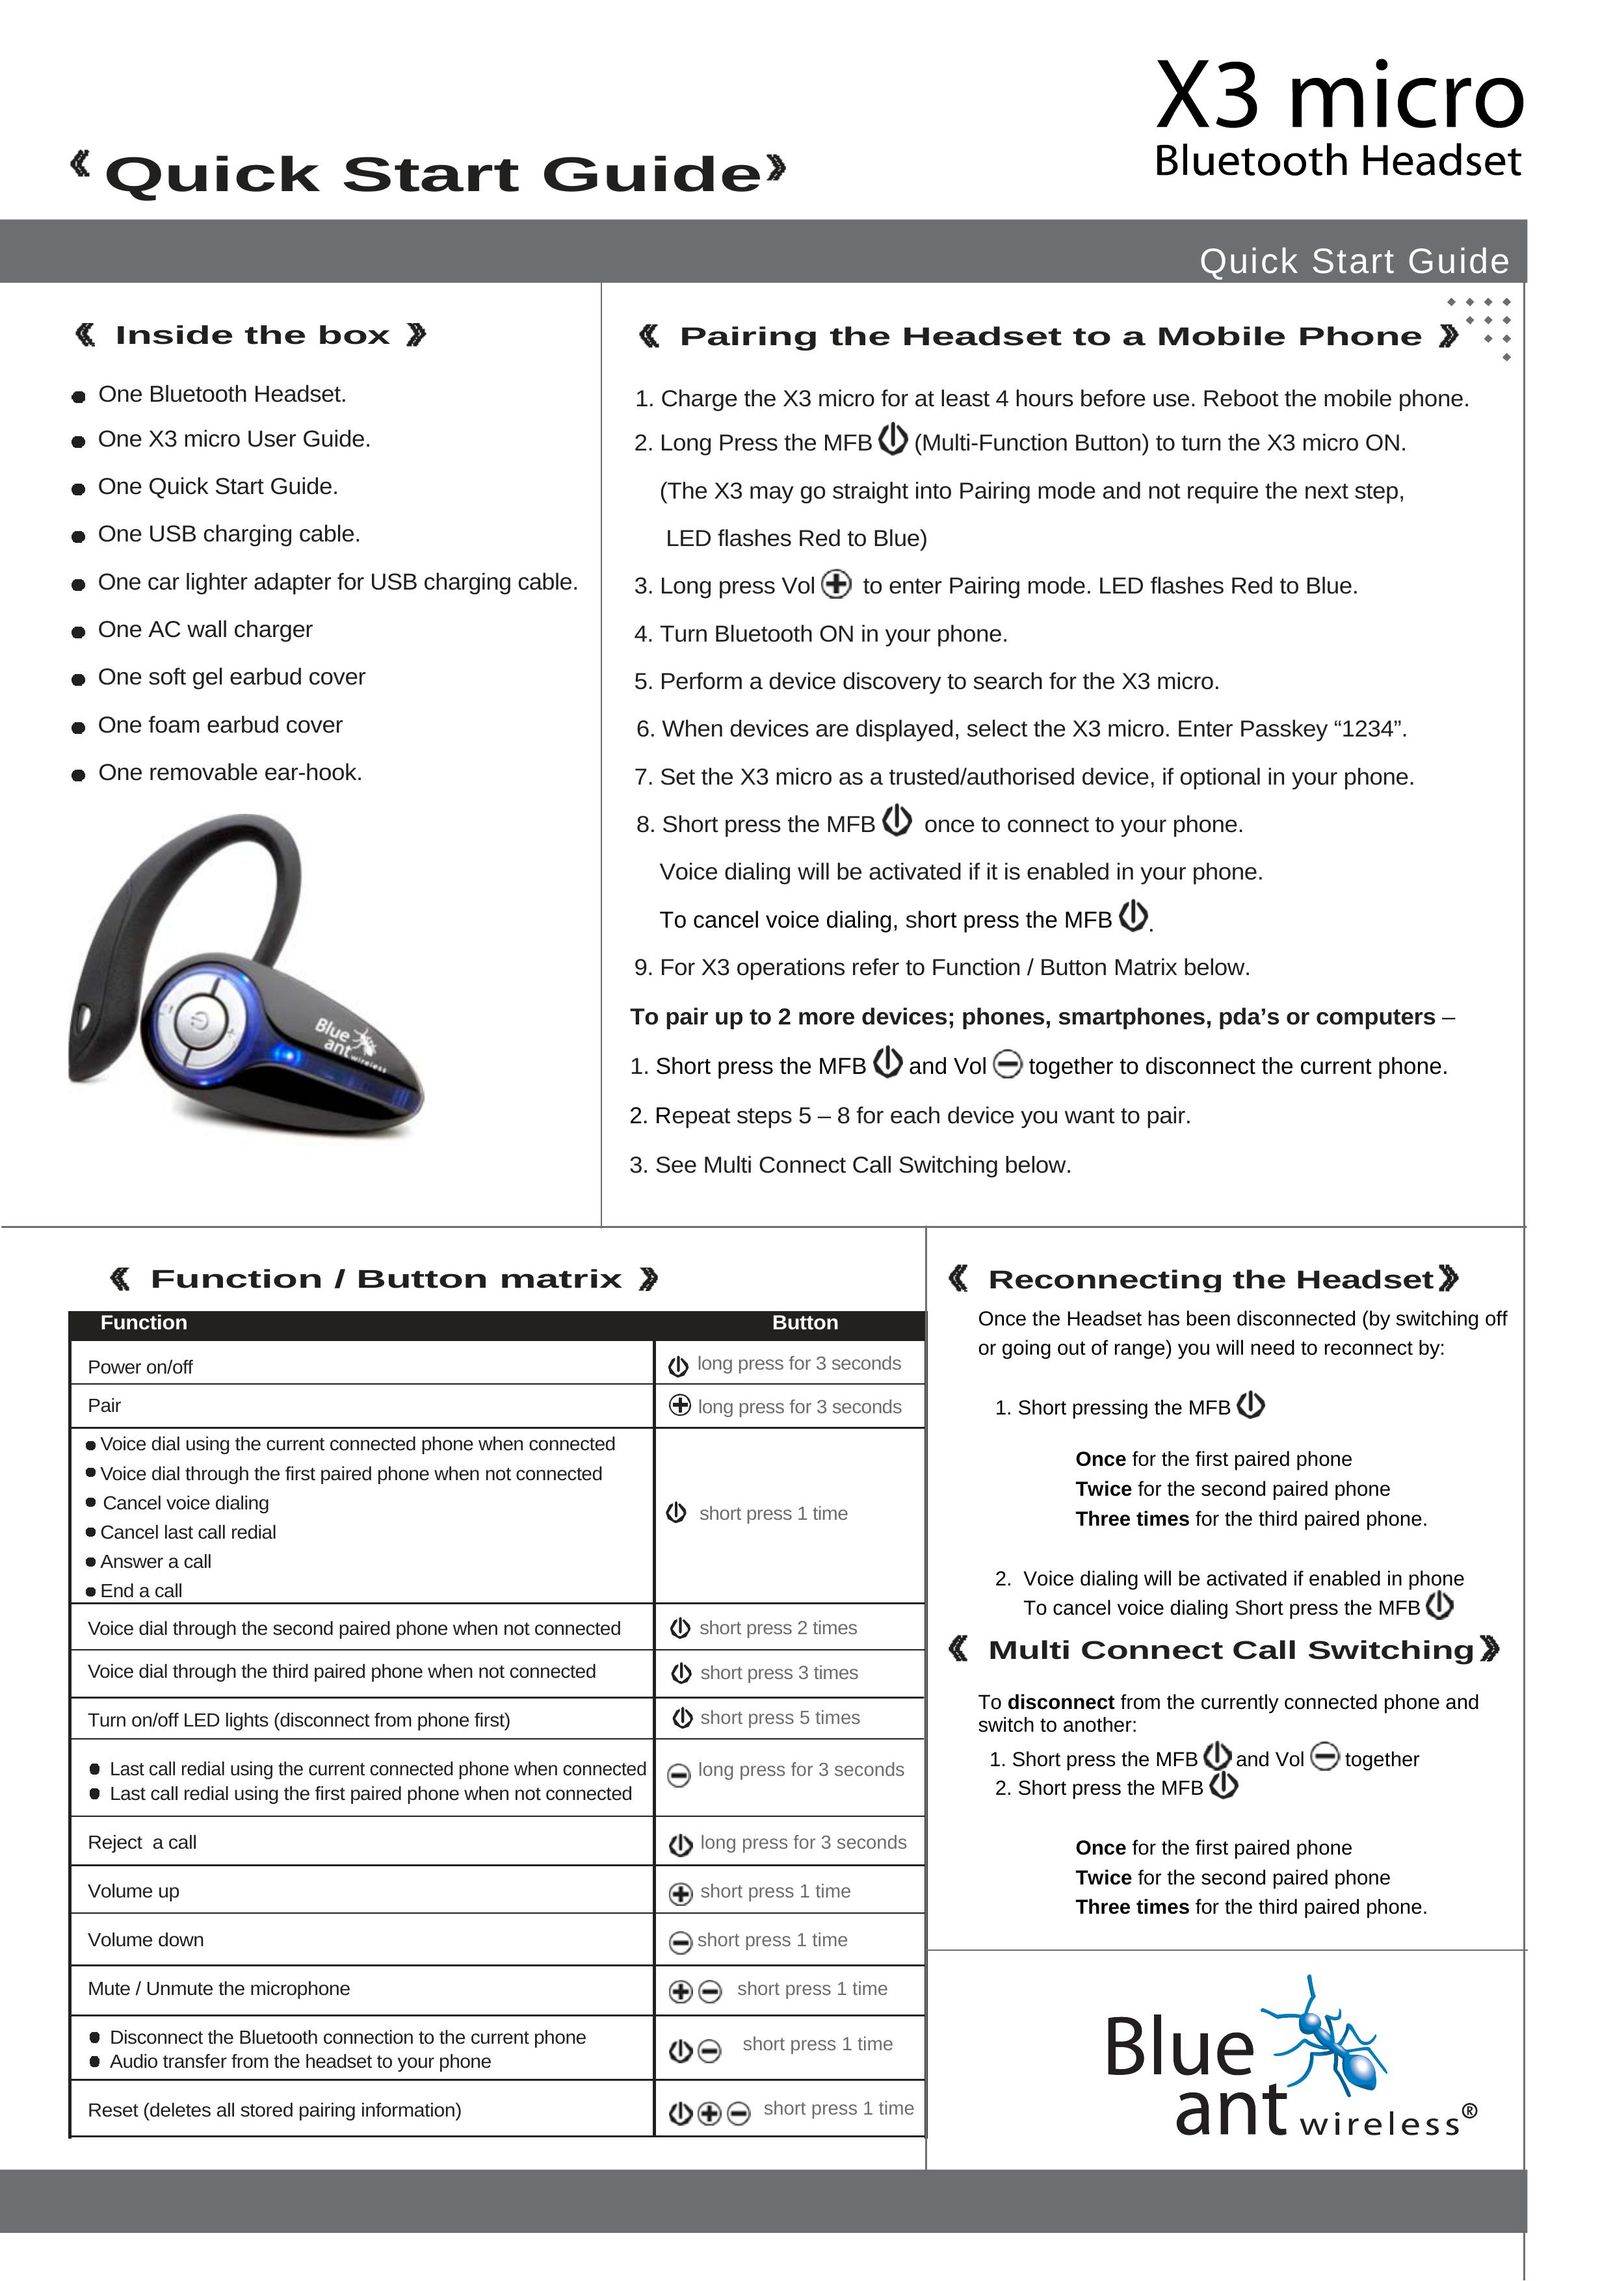 BlueAnt Wireless X3 Bluetooth Headset User Manual